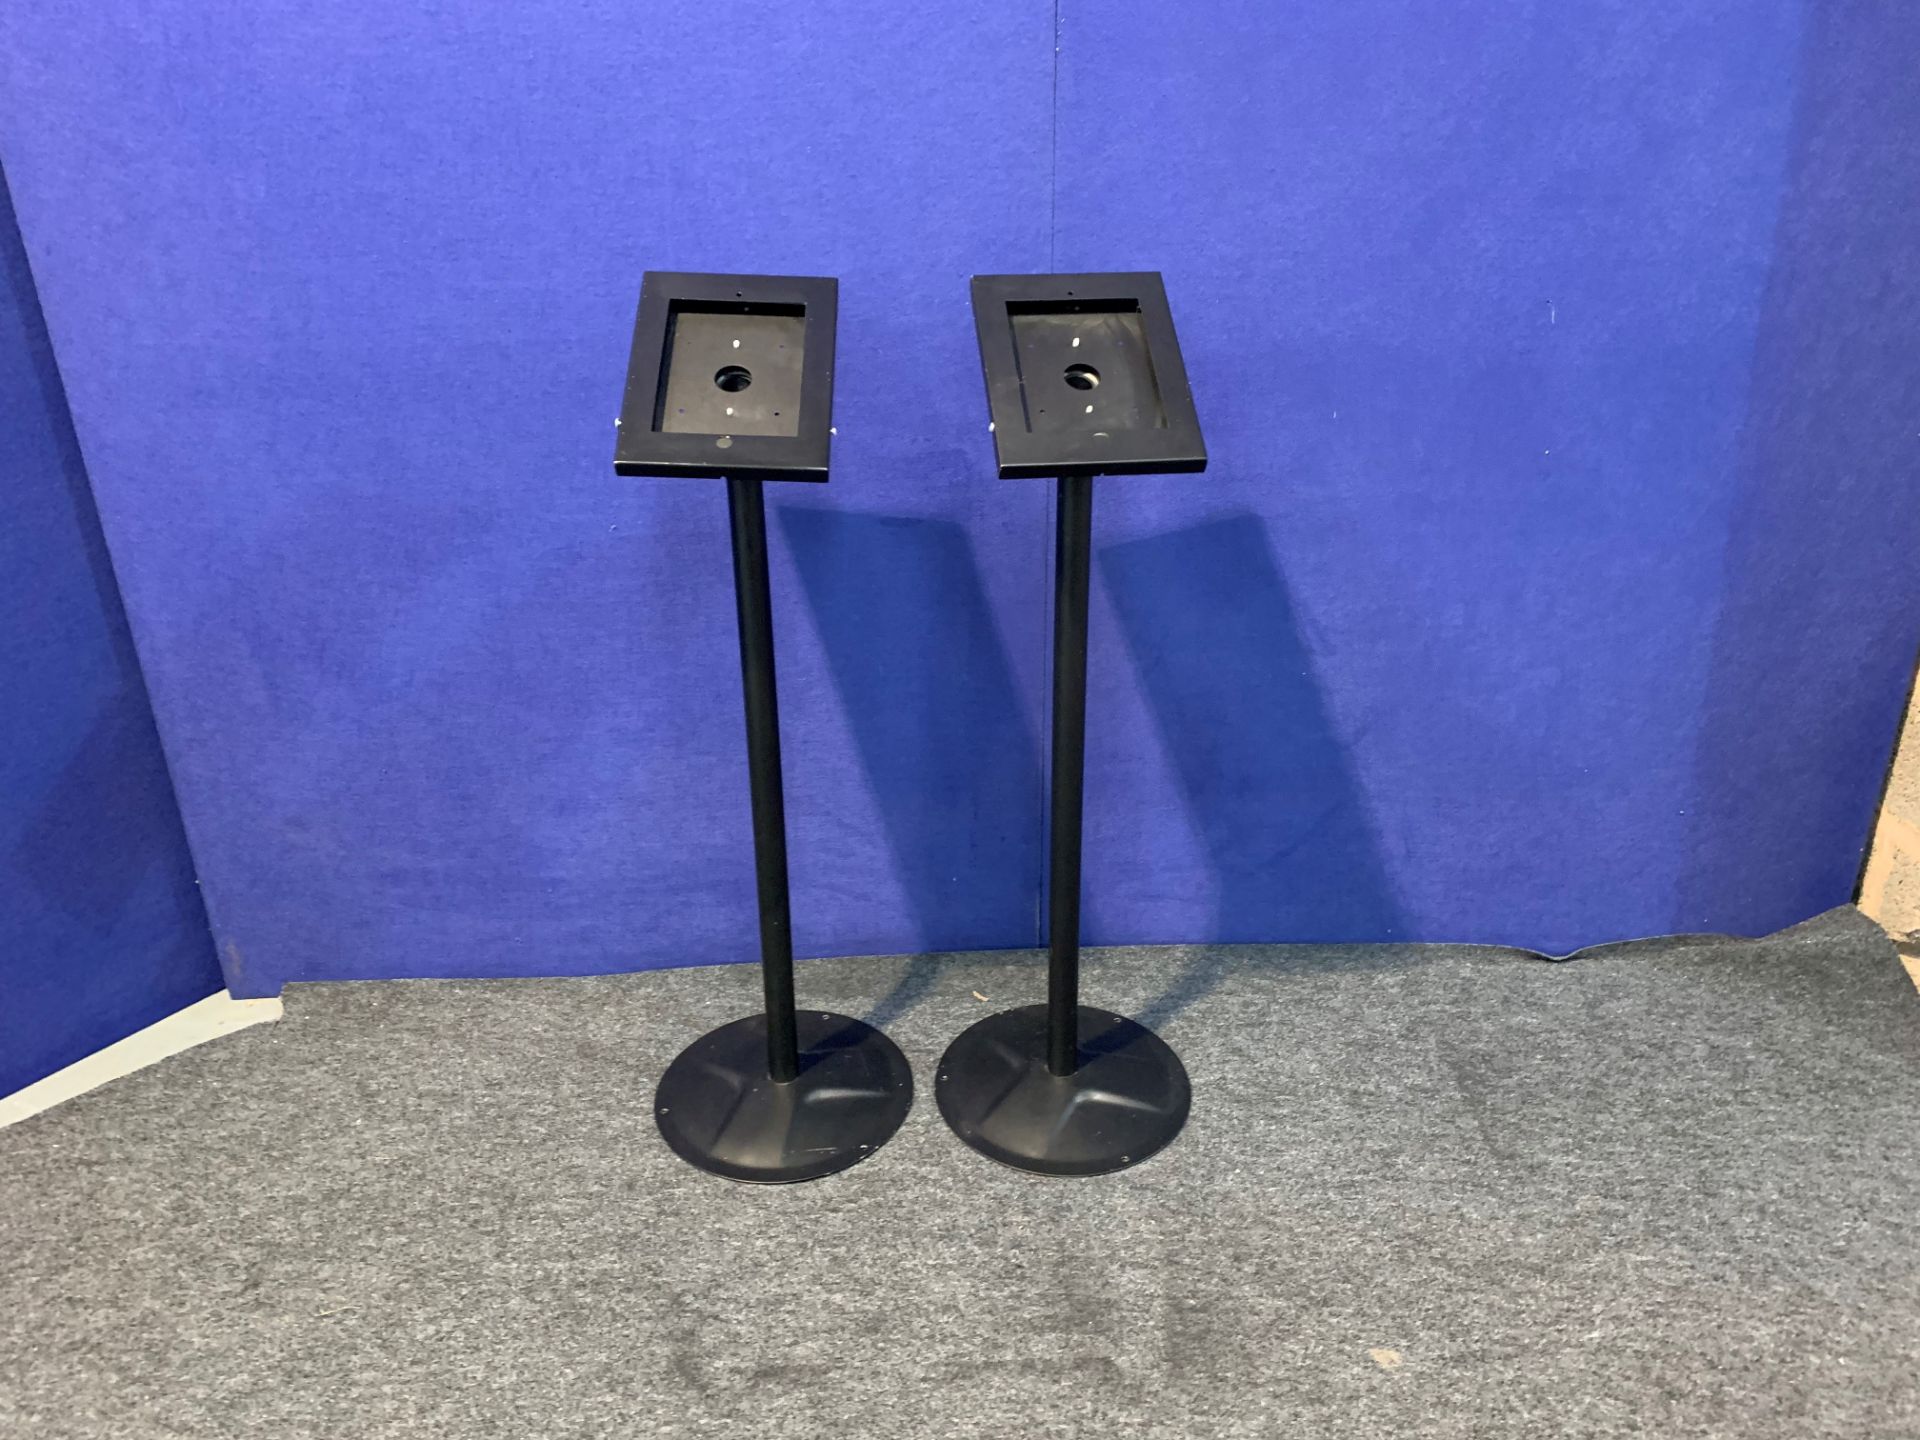 2 x Black IPAD Display Stands